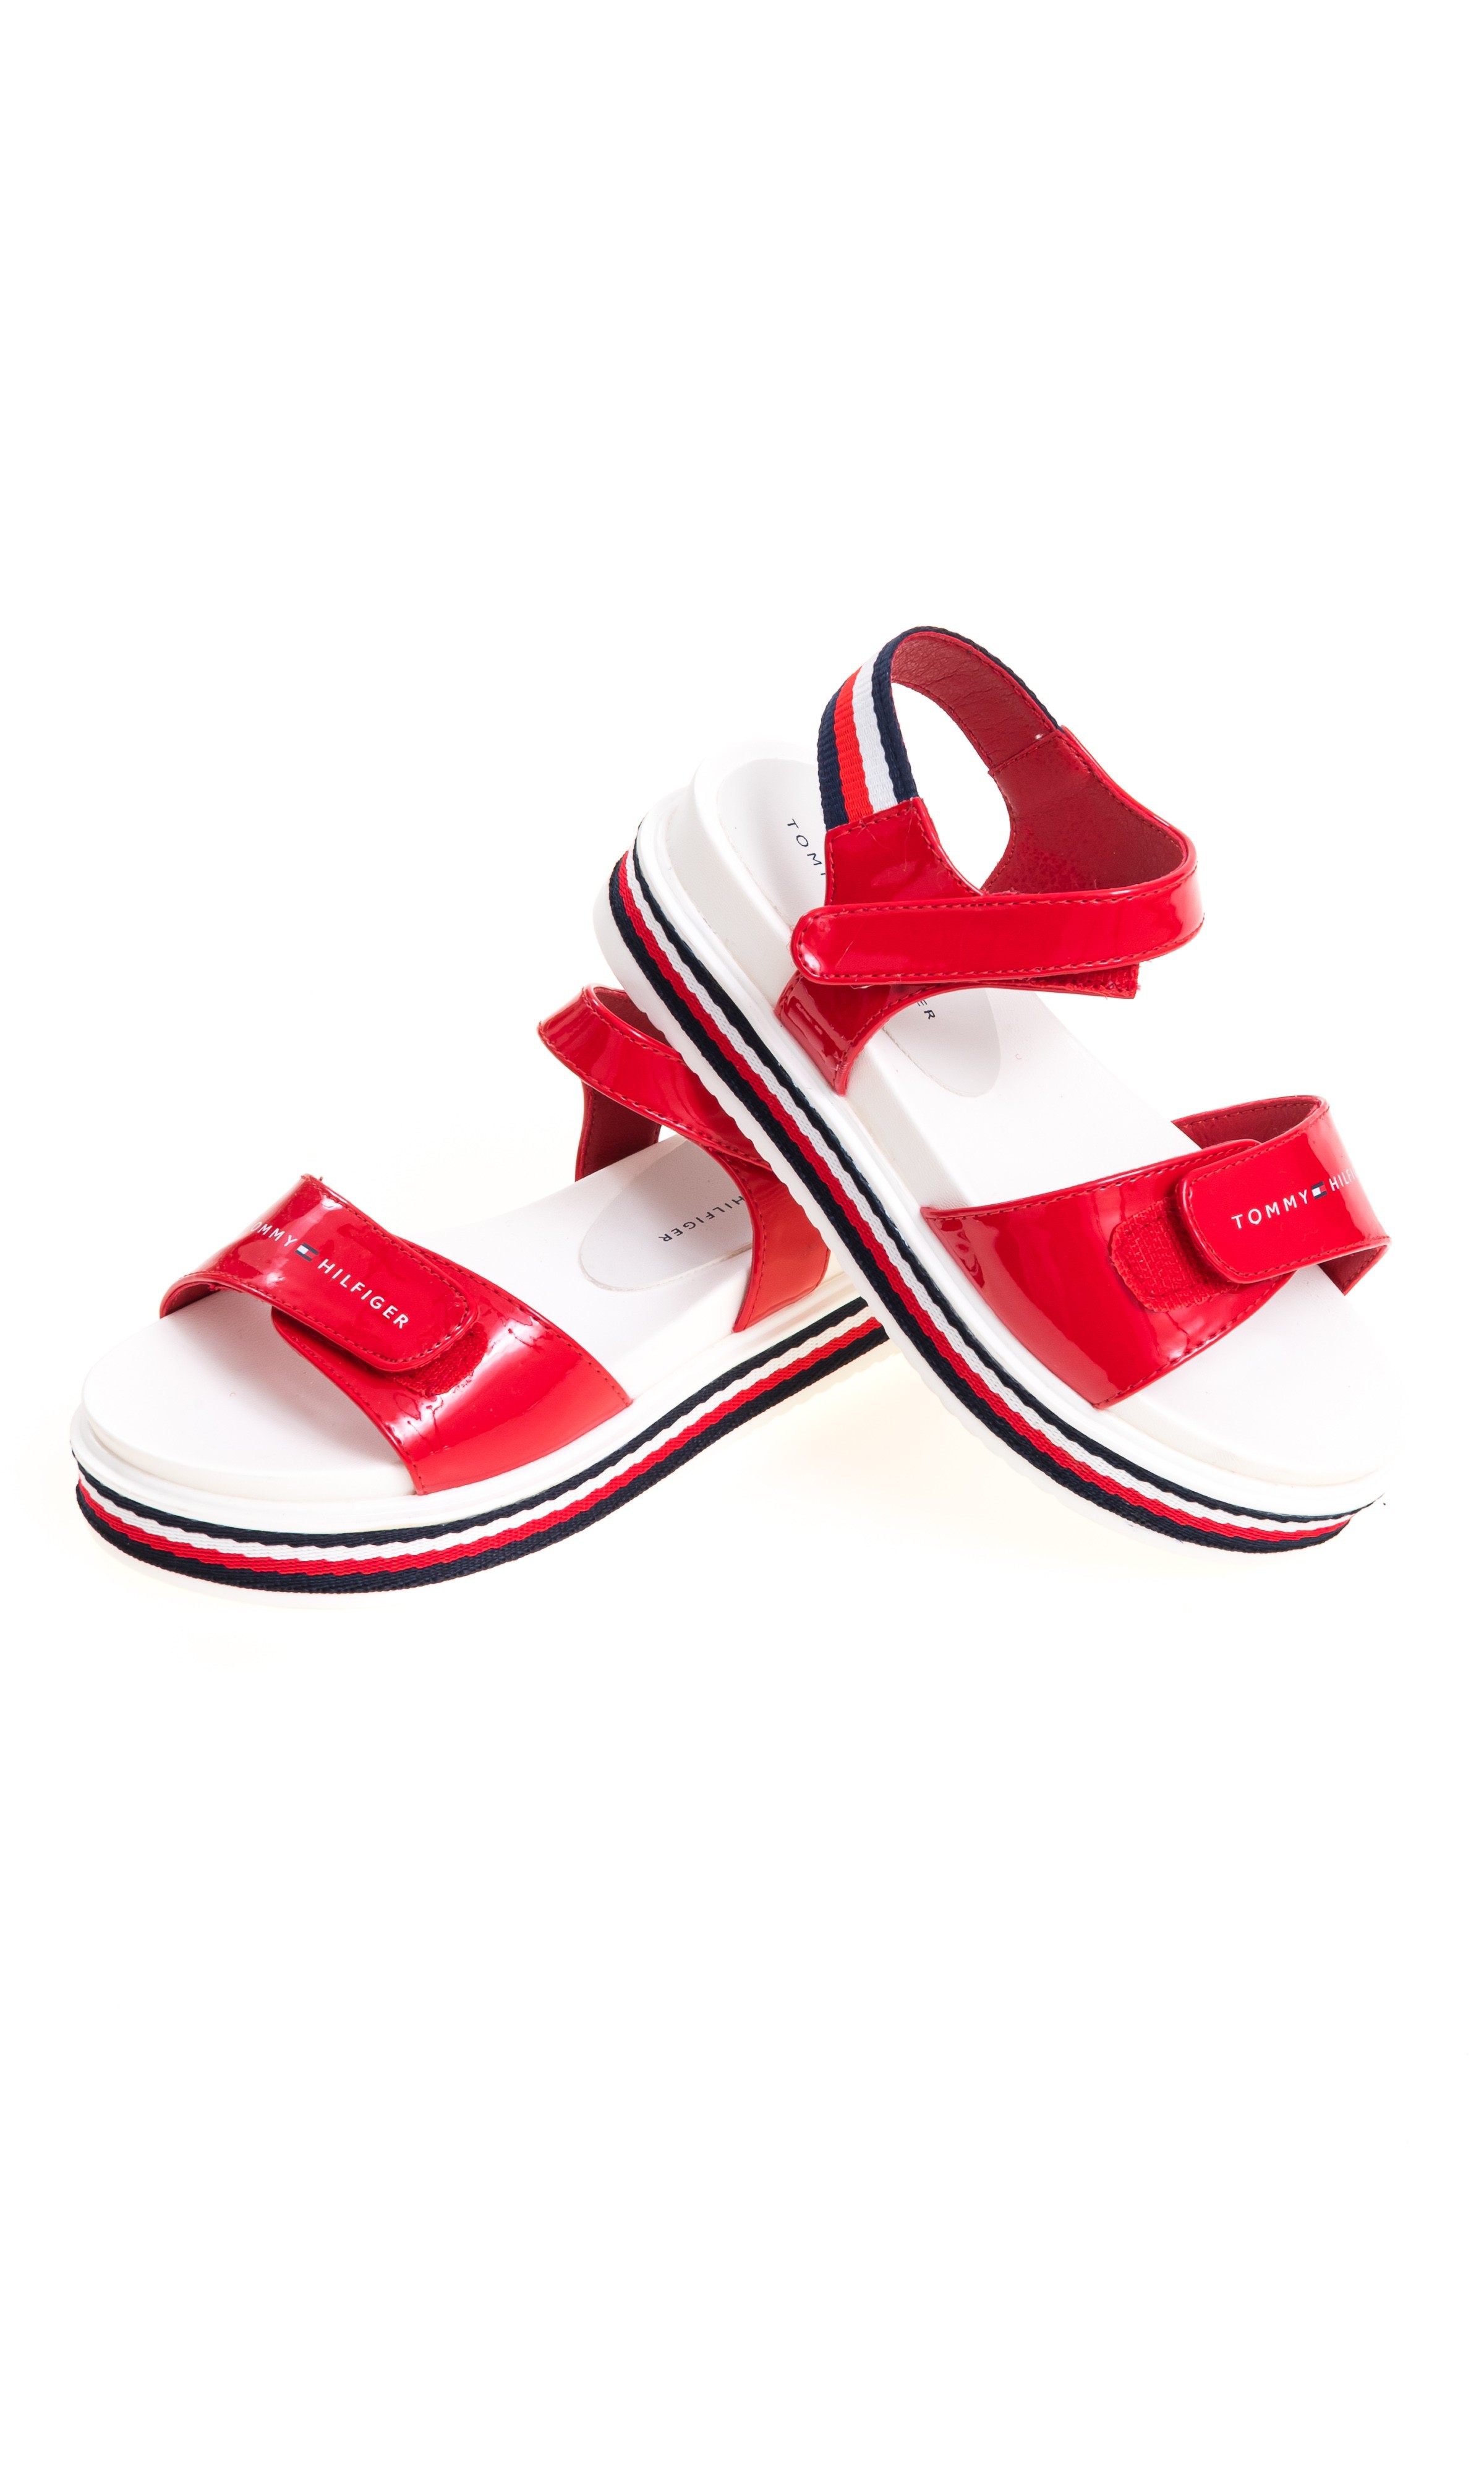 tommy hilfiger red sandals